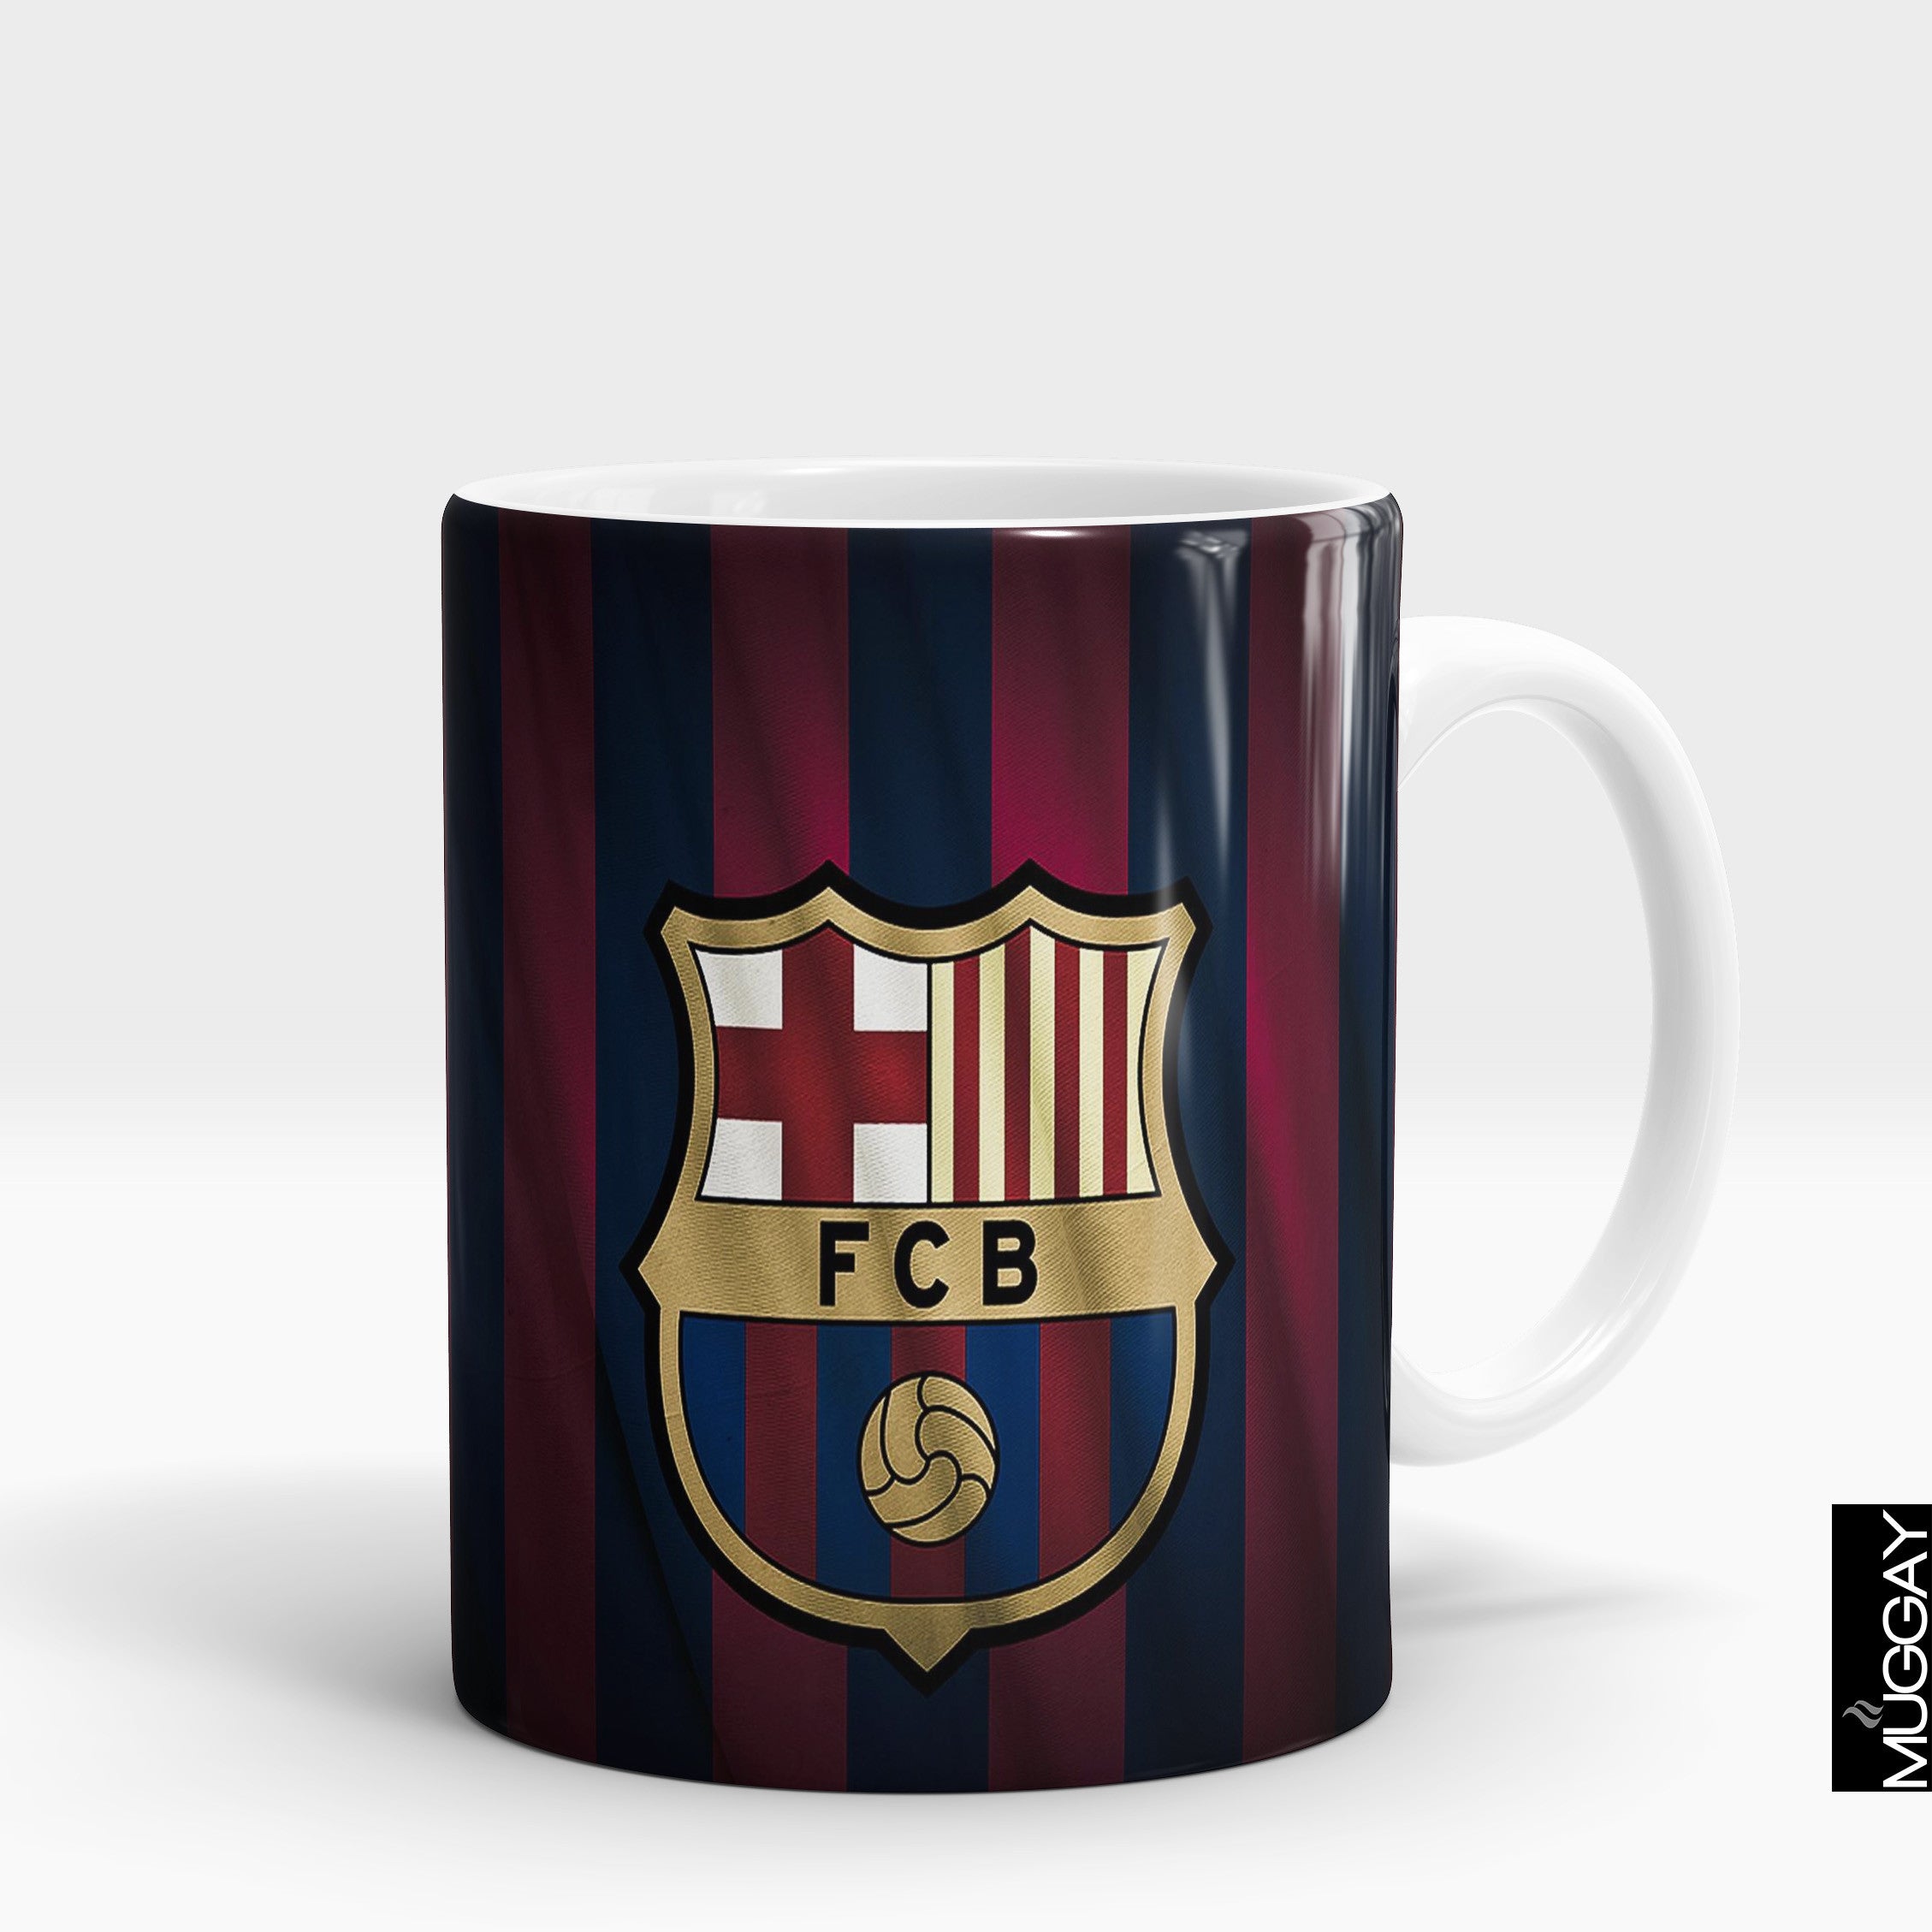 Football Theme mugs7